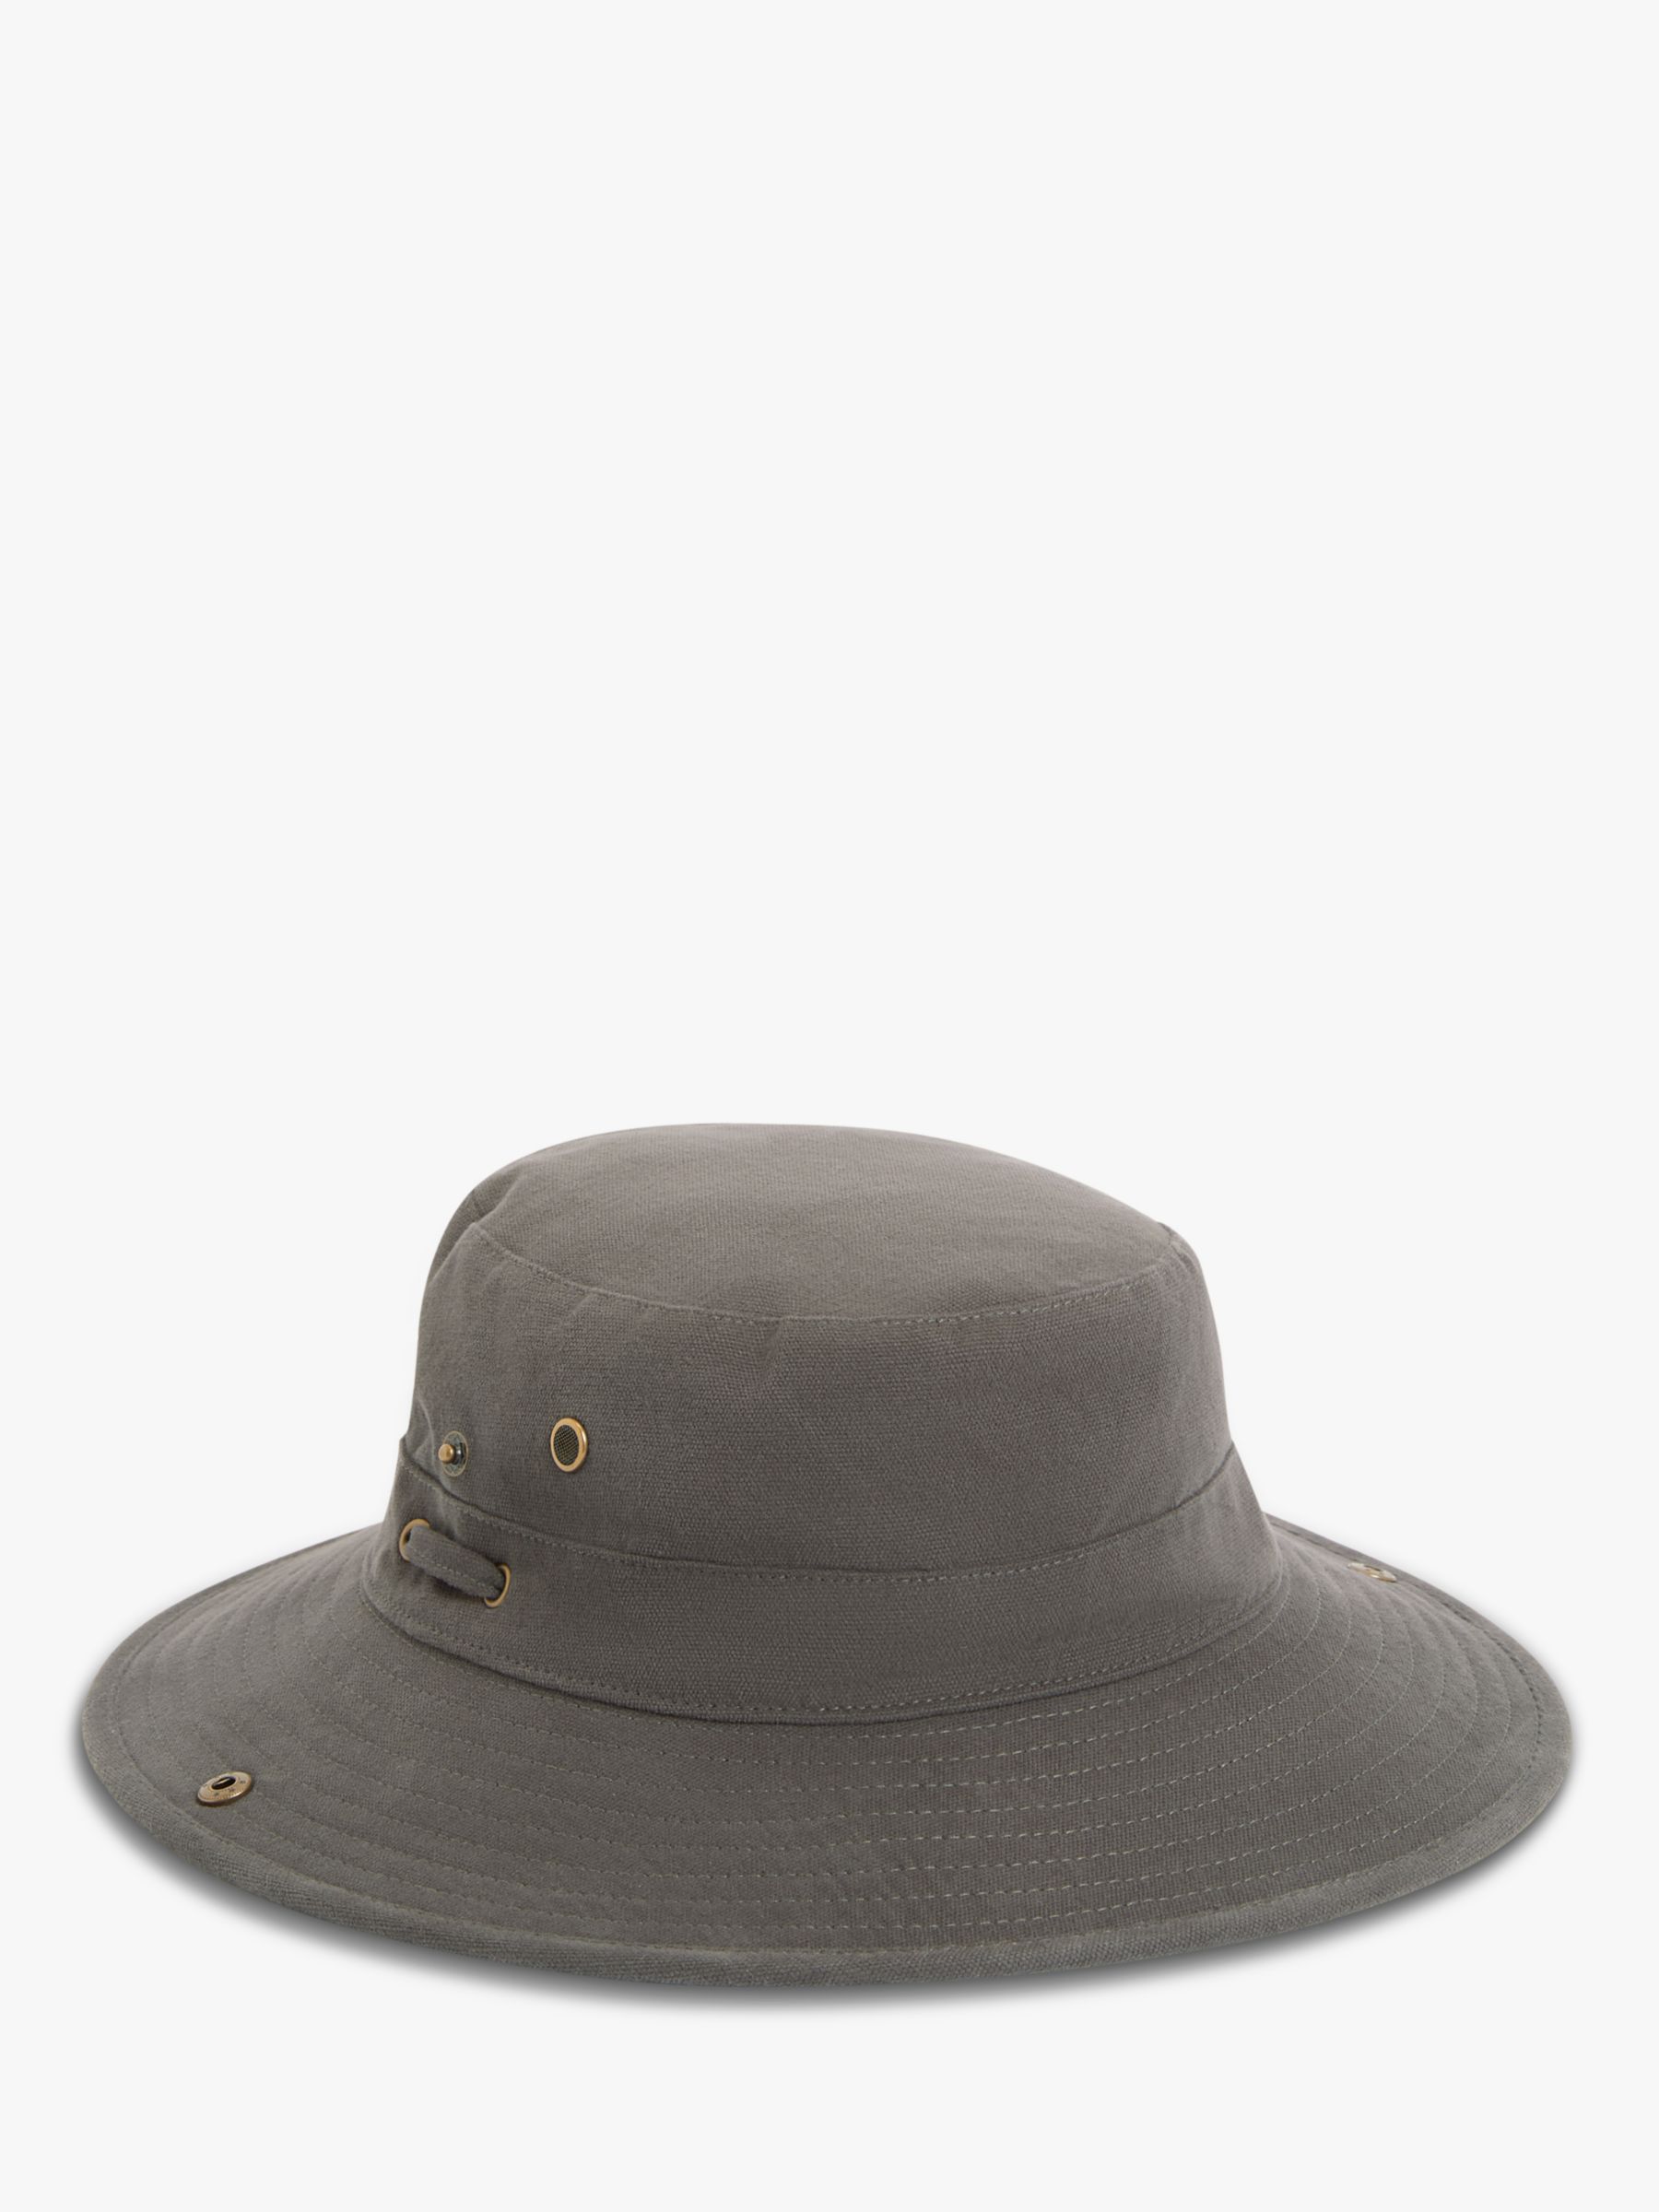 John Lewis Cotton Safari Hat, Charcoal, S-M